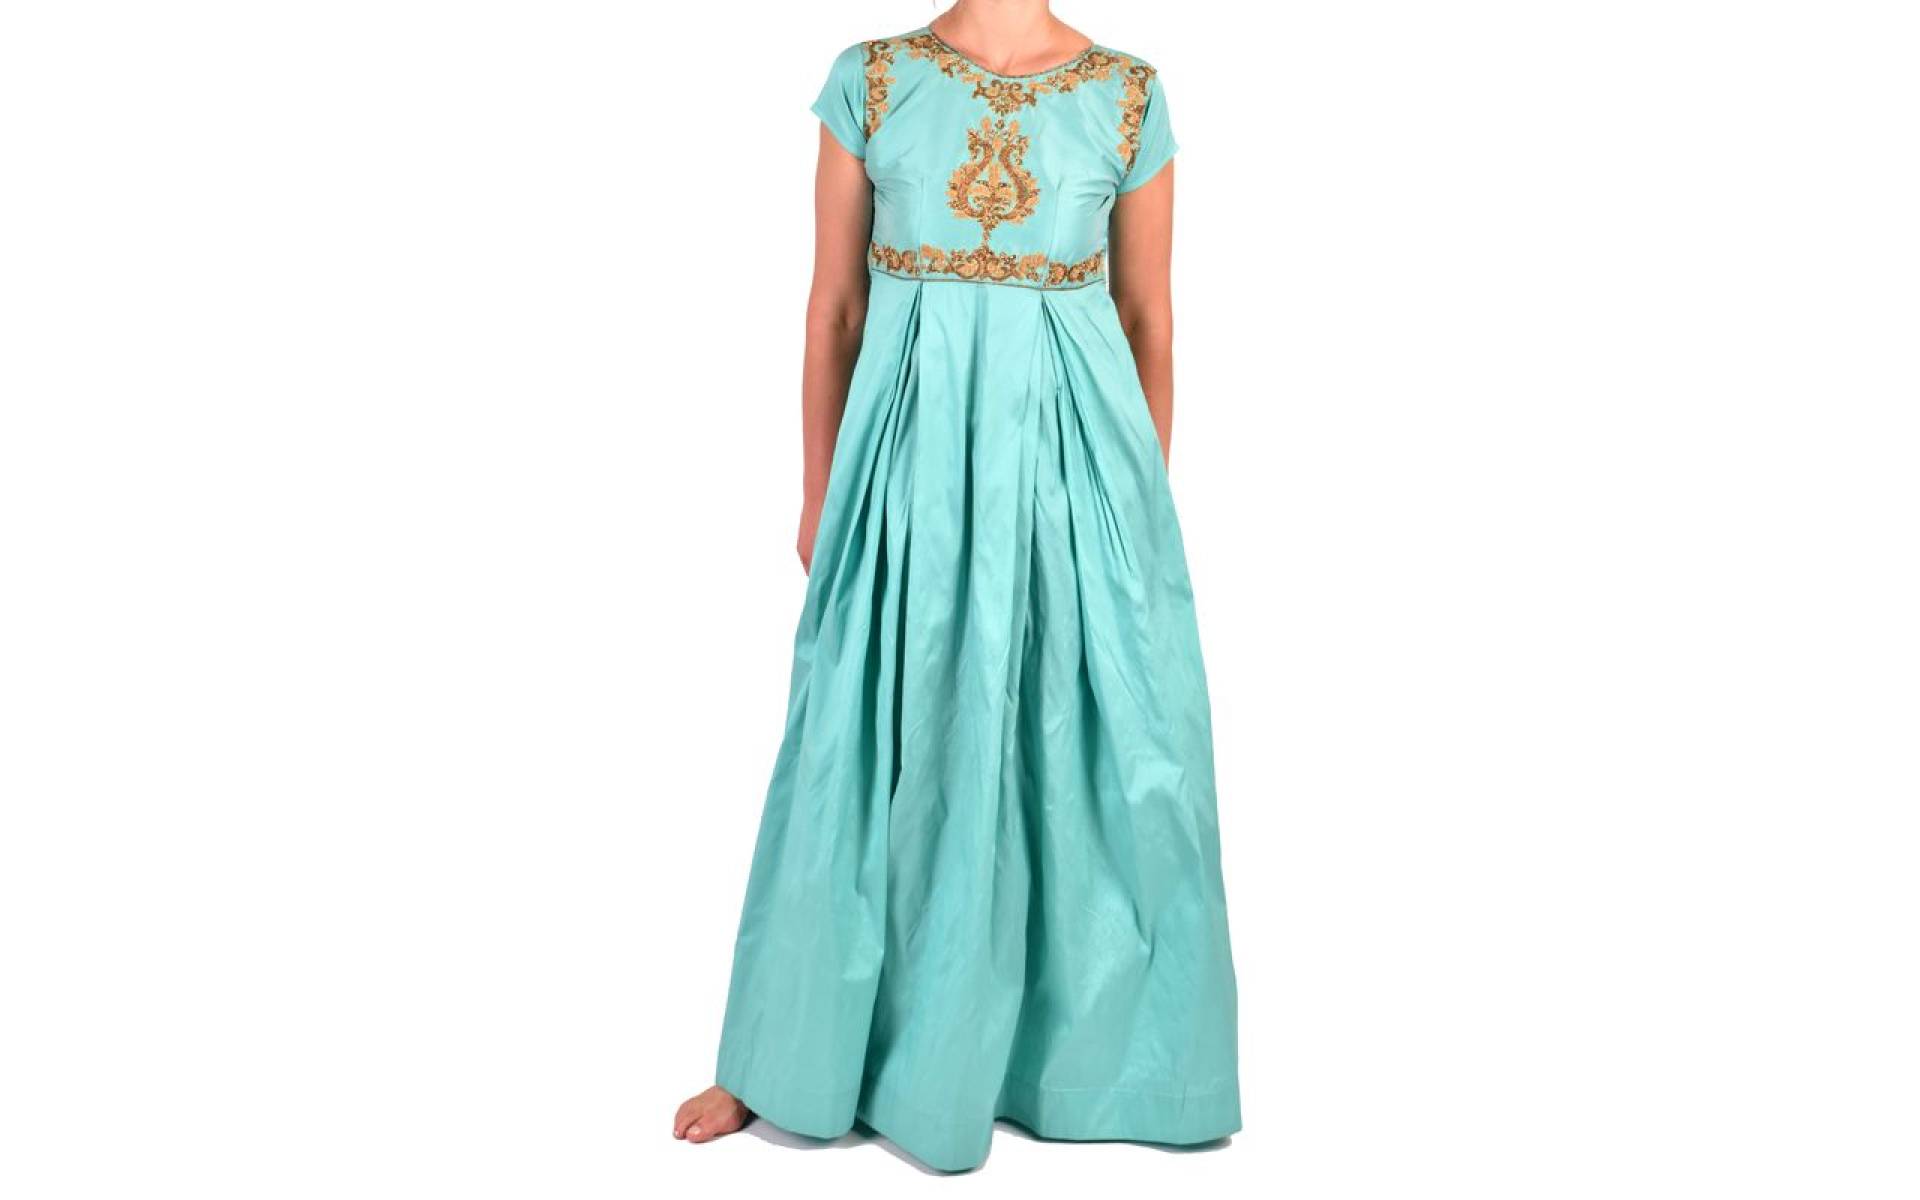 Luxusné indické šaty "Anarkali", mentolovo zelené, leginy